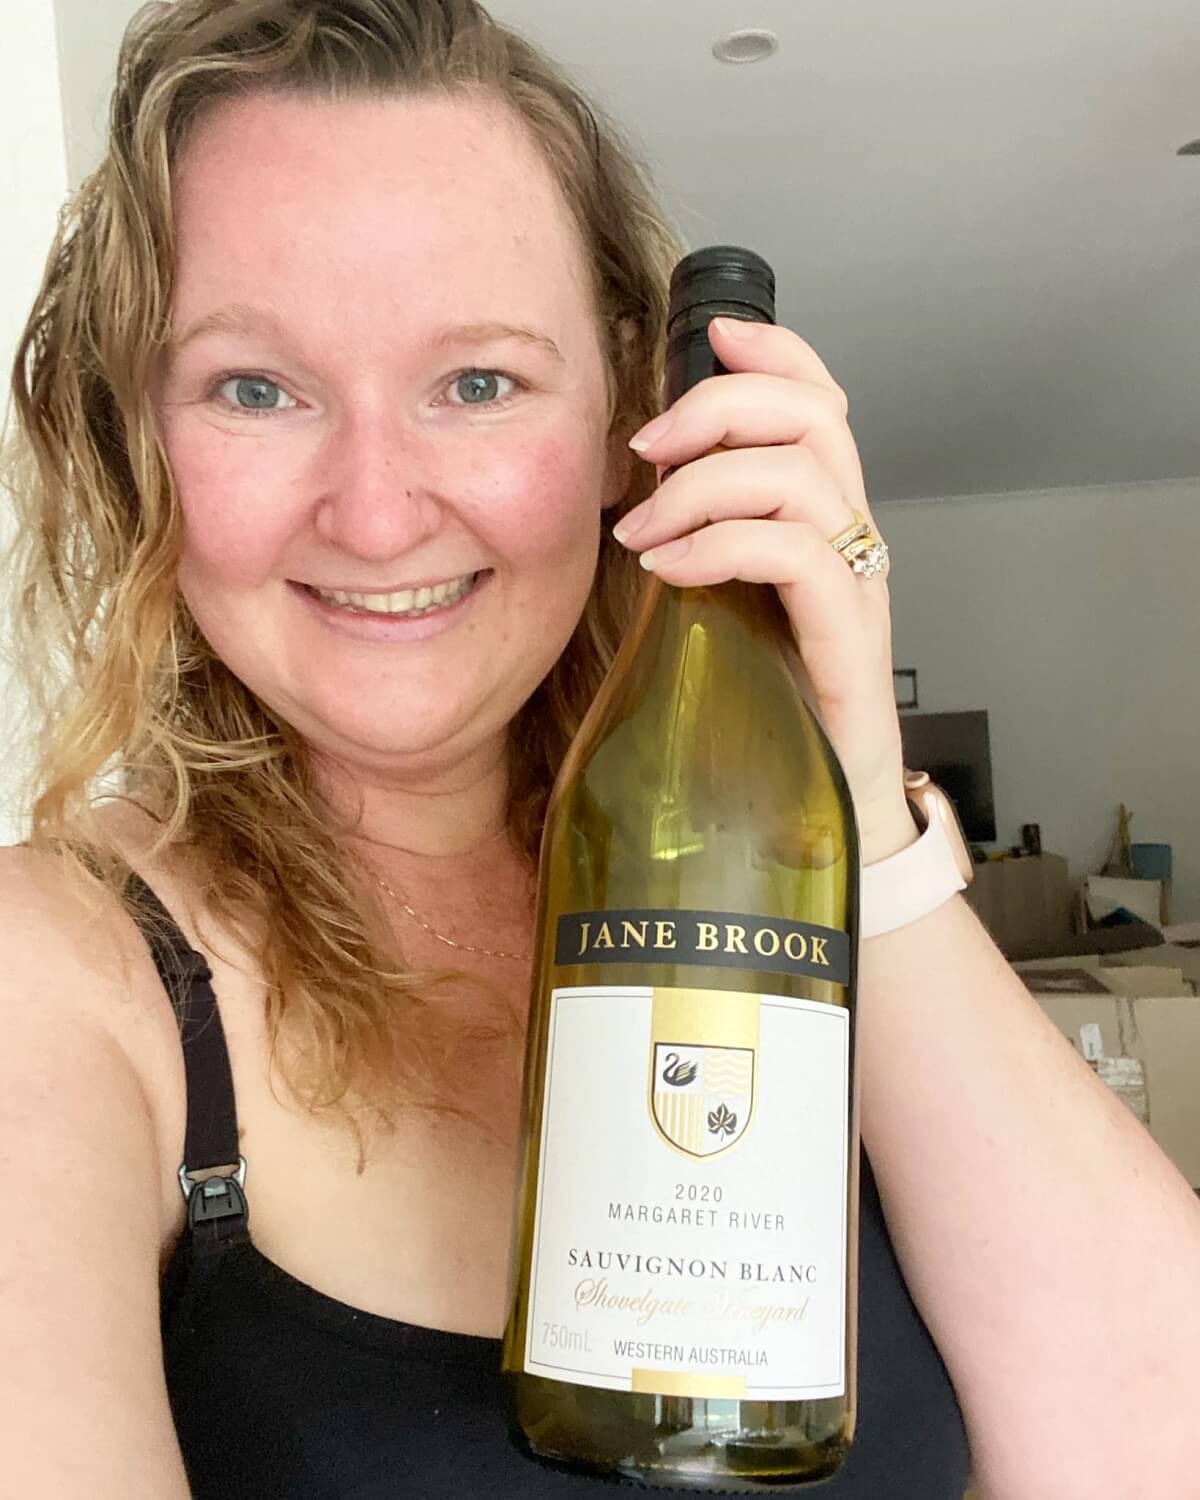 Jane Brook Estate Wines 2020 Sauvignon Blanc